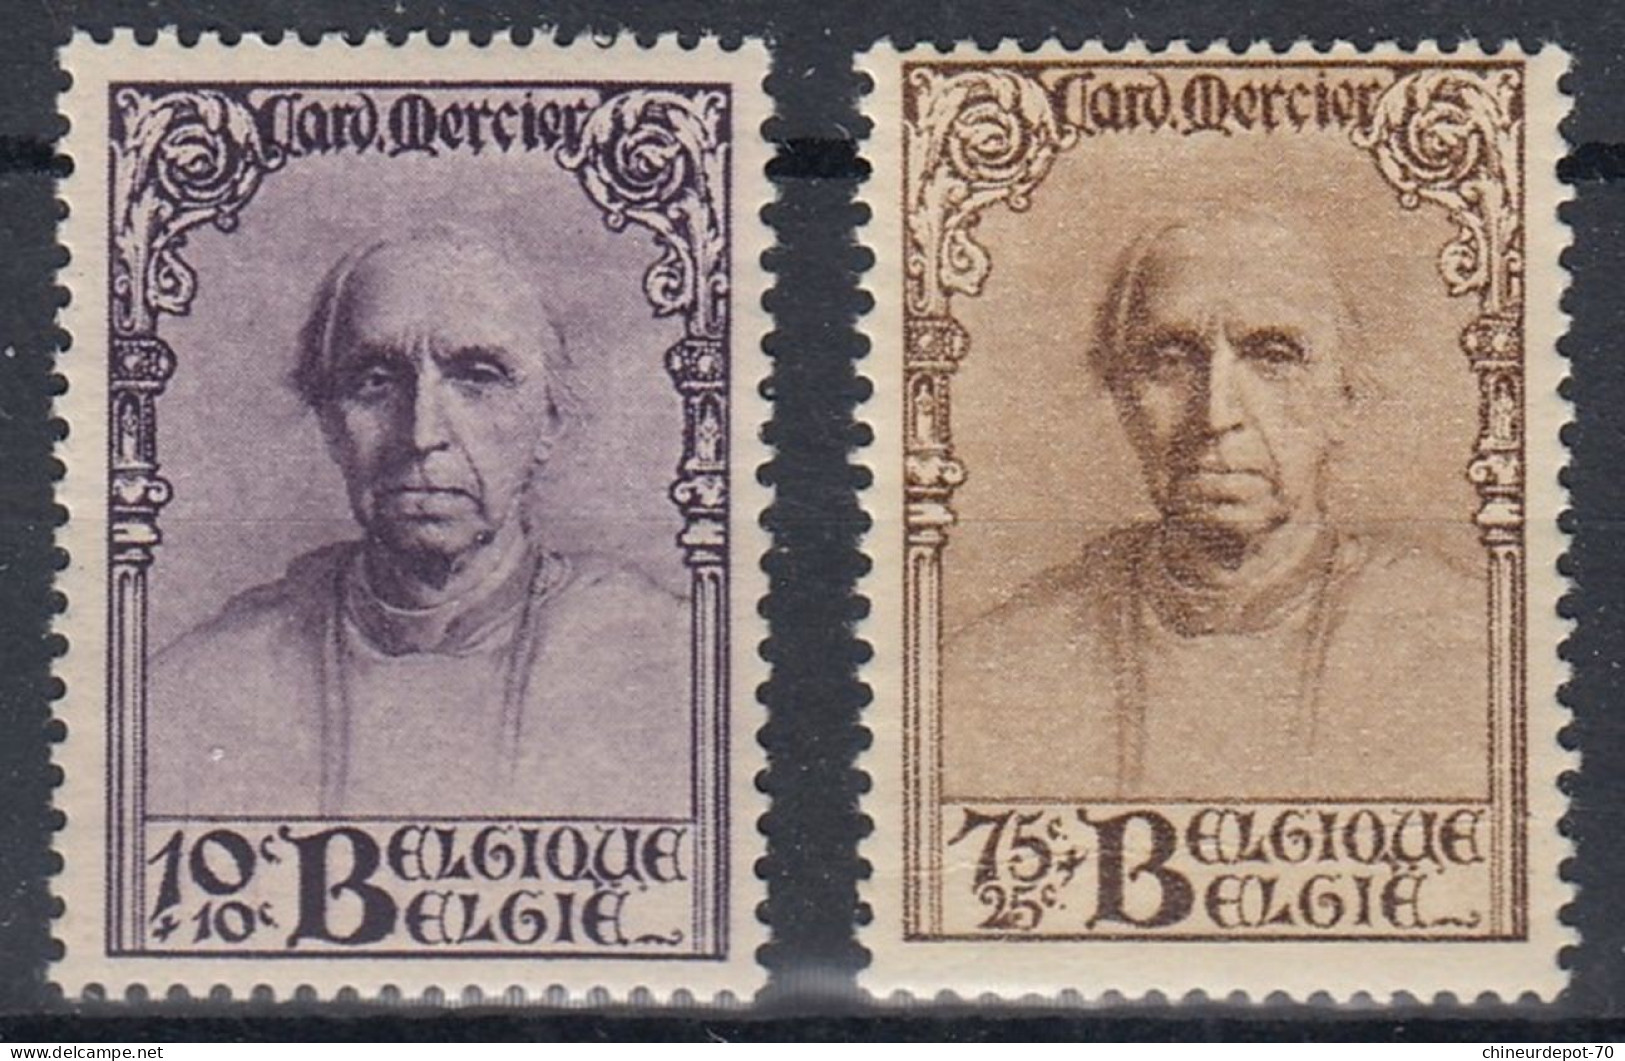 1932  CARDINAL MERCIER NEUFS AVEC CHARNIERE * - Unused Stamps